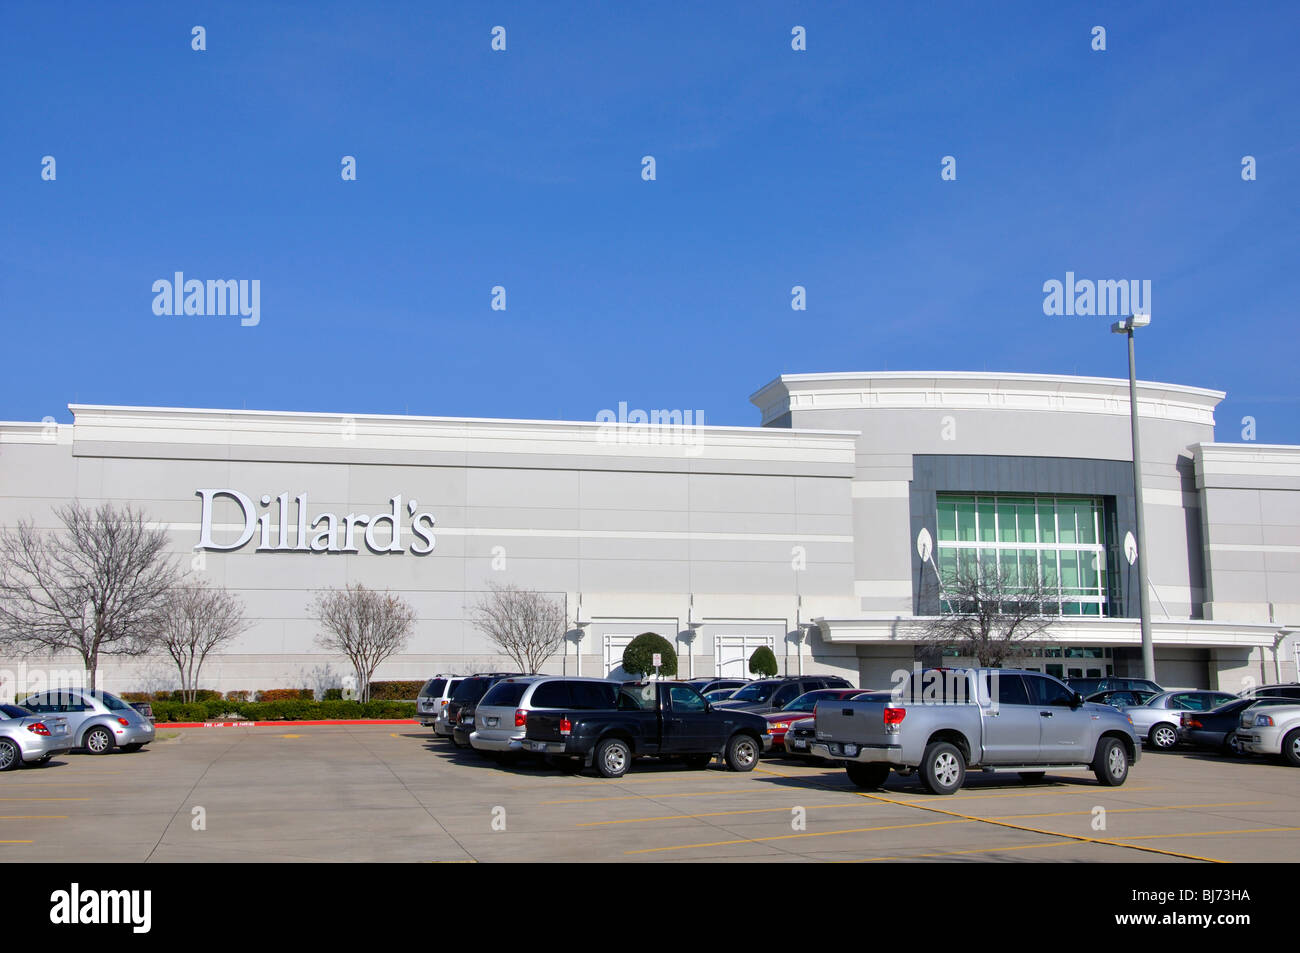 DILLARD'S - 20 Photos & 32 Reviews - 2501 Dallas Pkwy, Plano